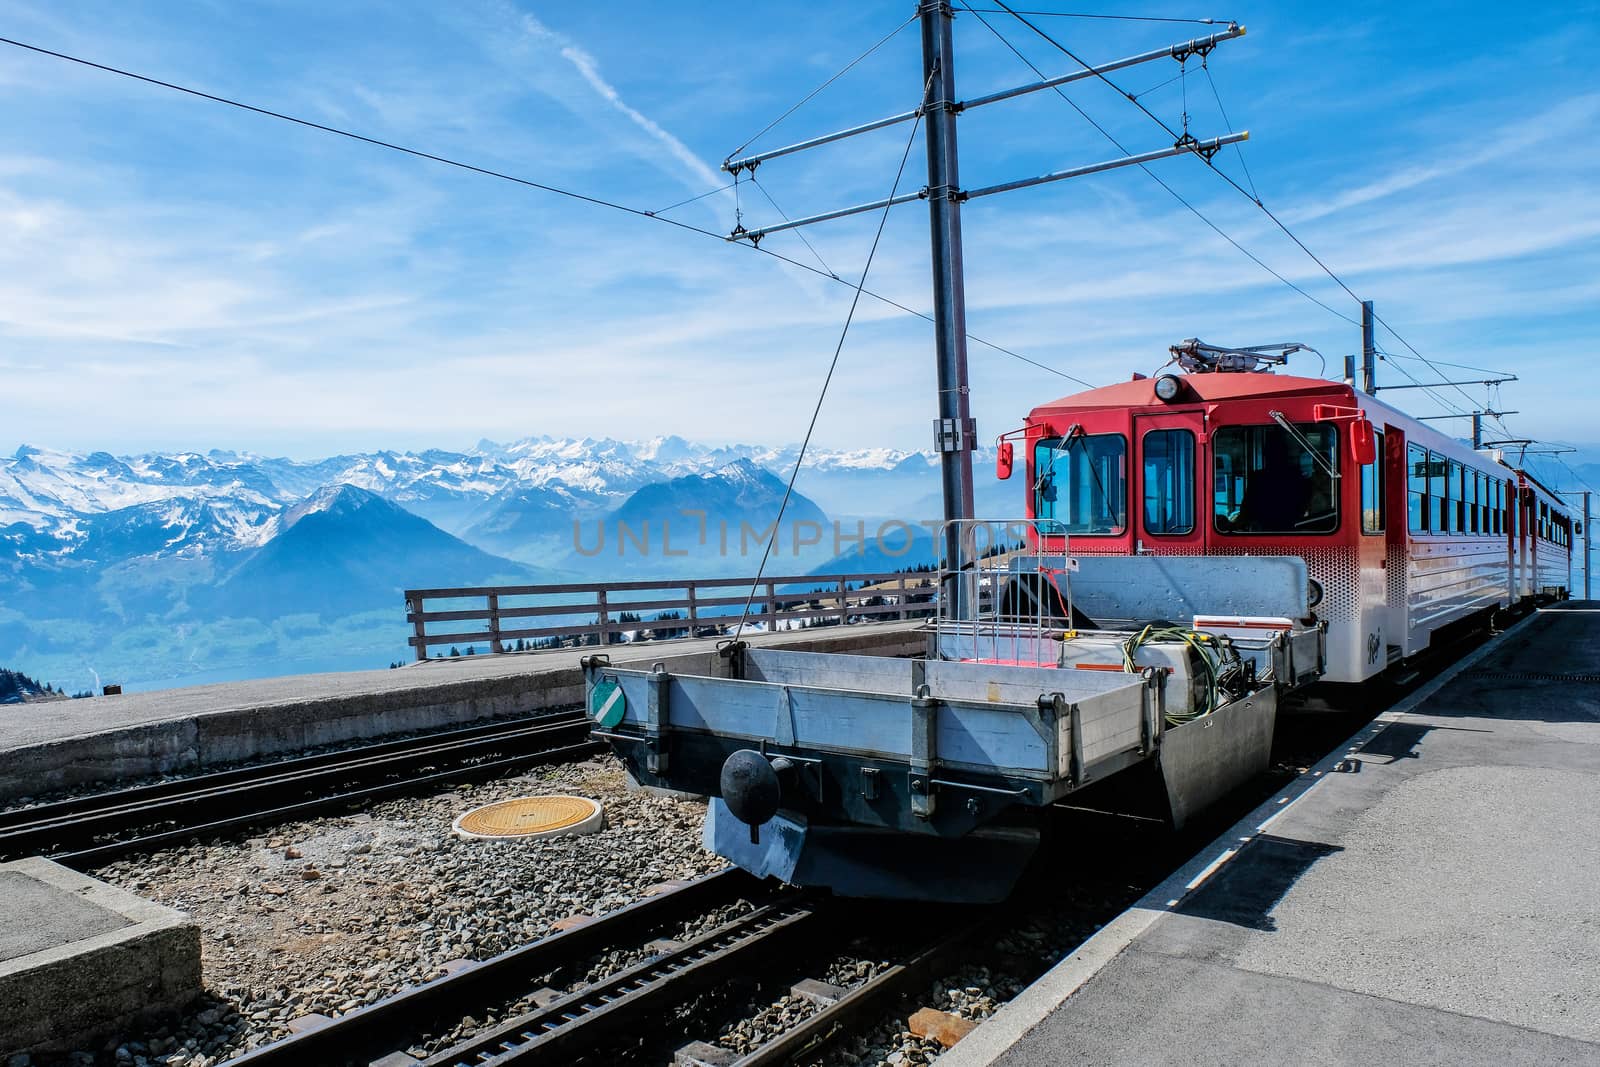 Famous electric red tourist swiss train on Rigi mountain,Switzerland,Europe